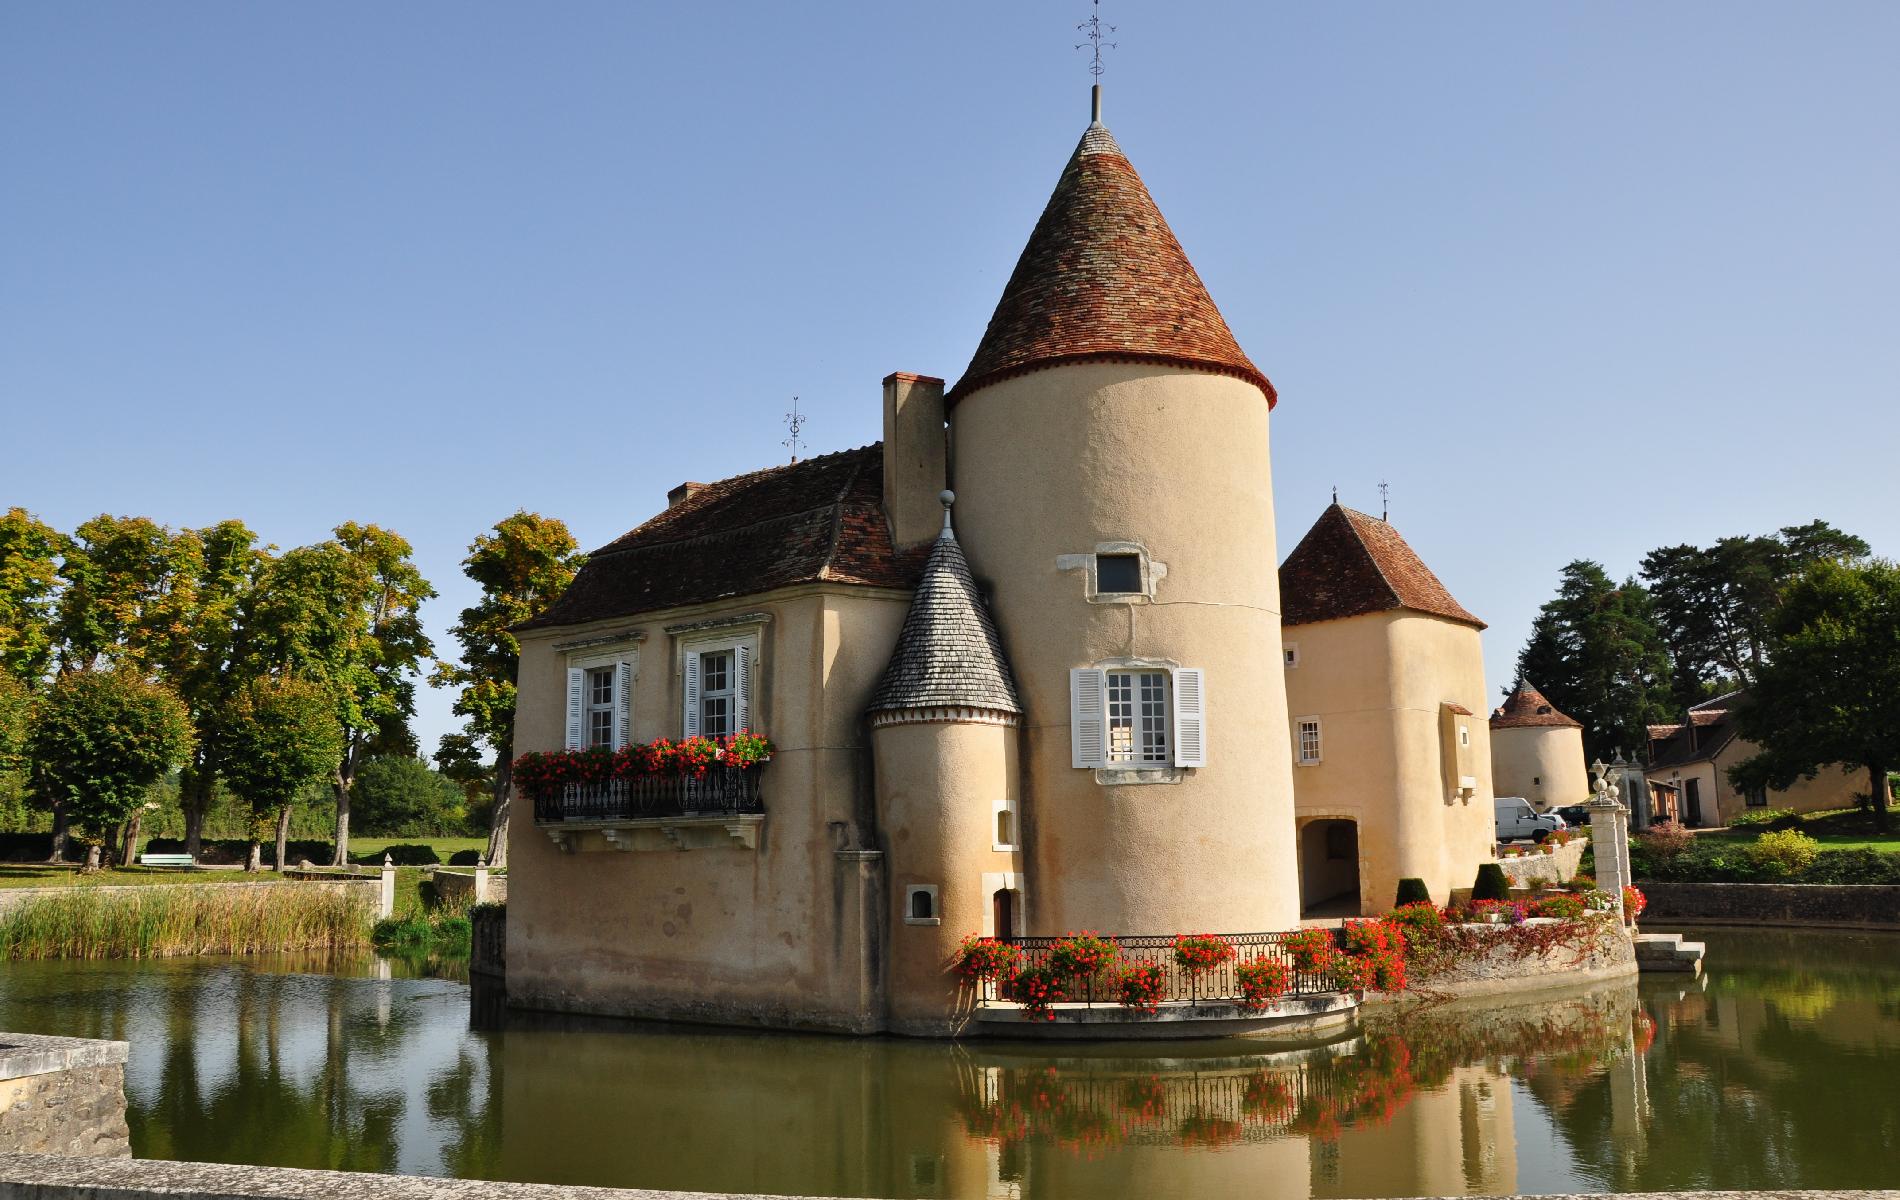  The Chateau de Courbat